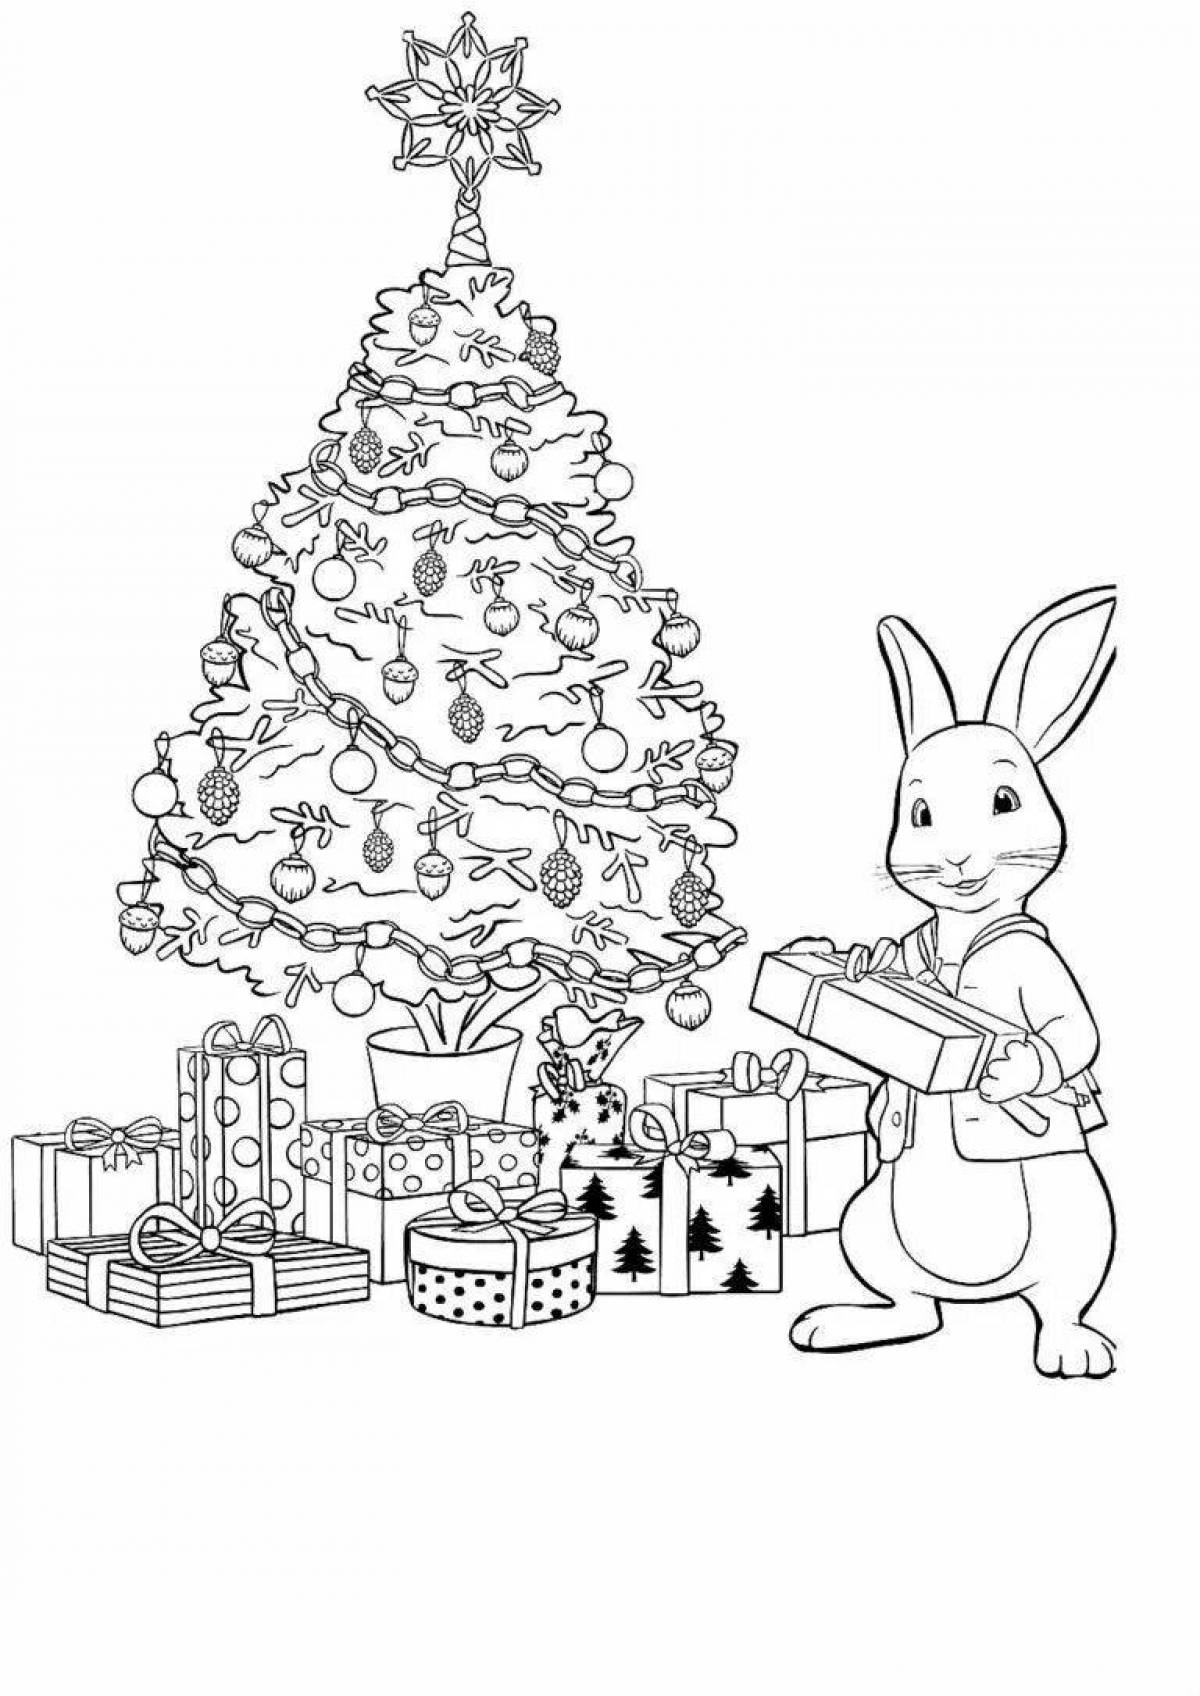 Christmas coloring book shining bunny